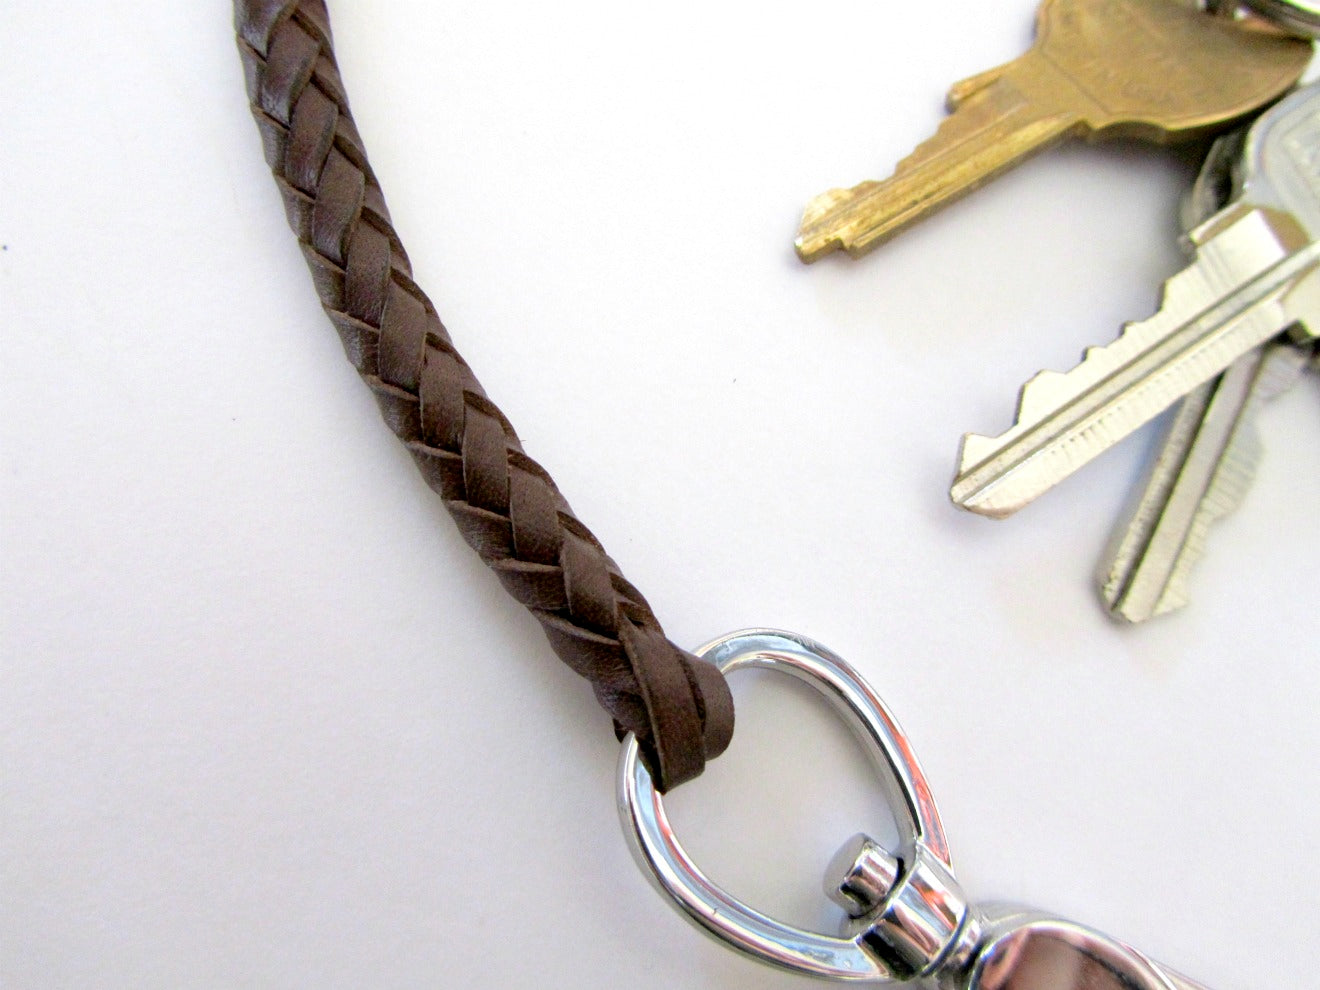 braided leather key chain san filippo leather